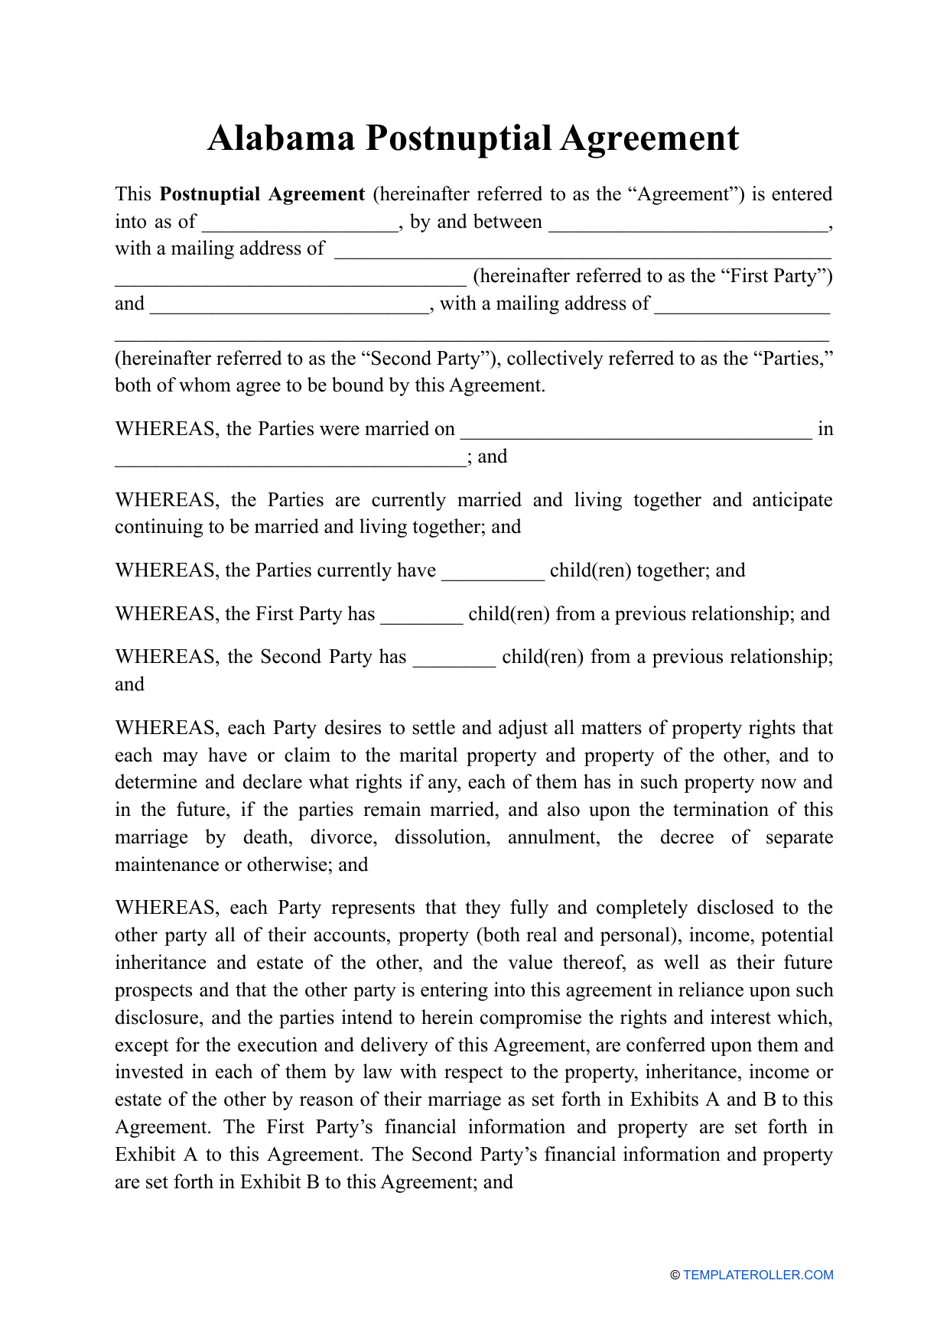 Postnuptial Agreement Template - Alabama, Page 1